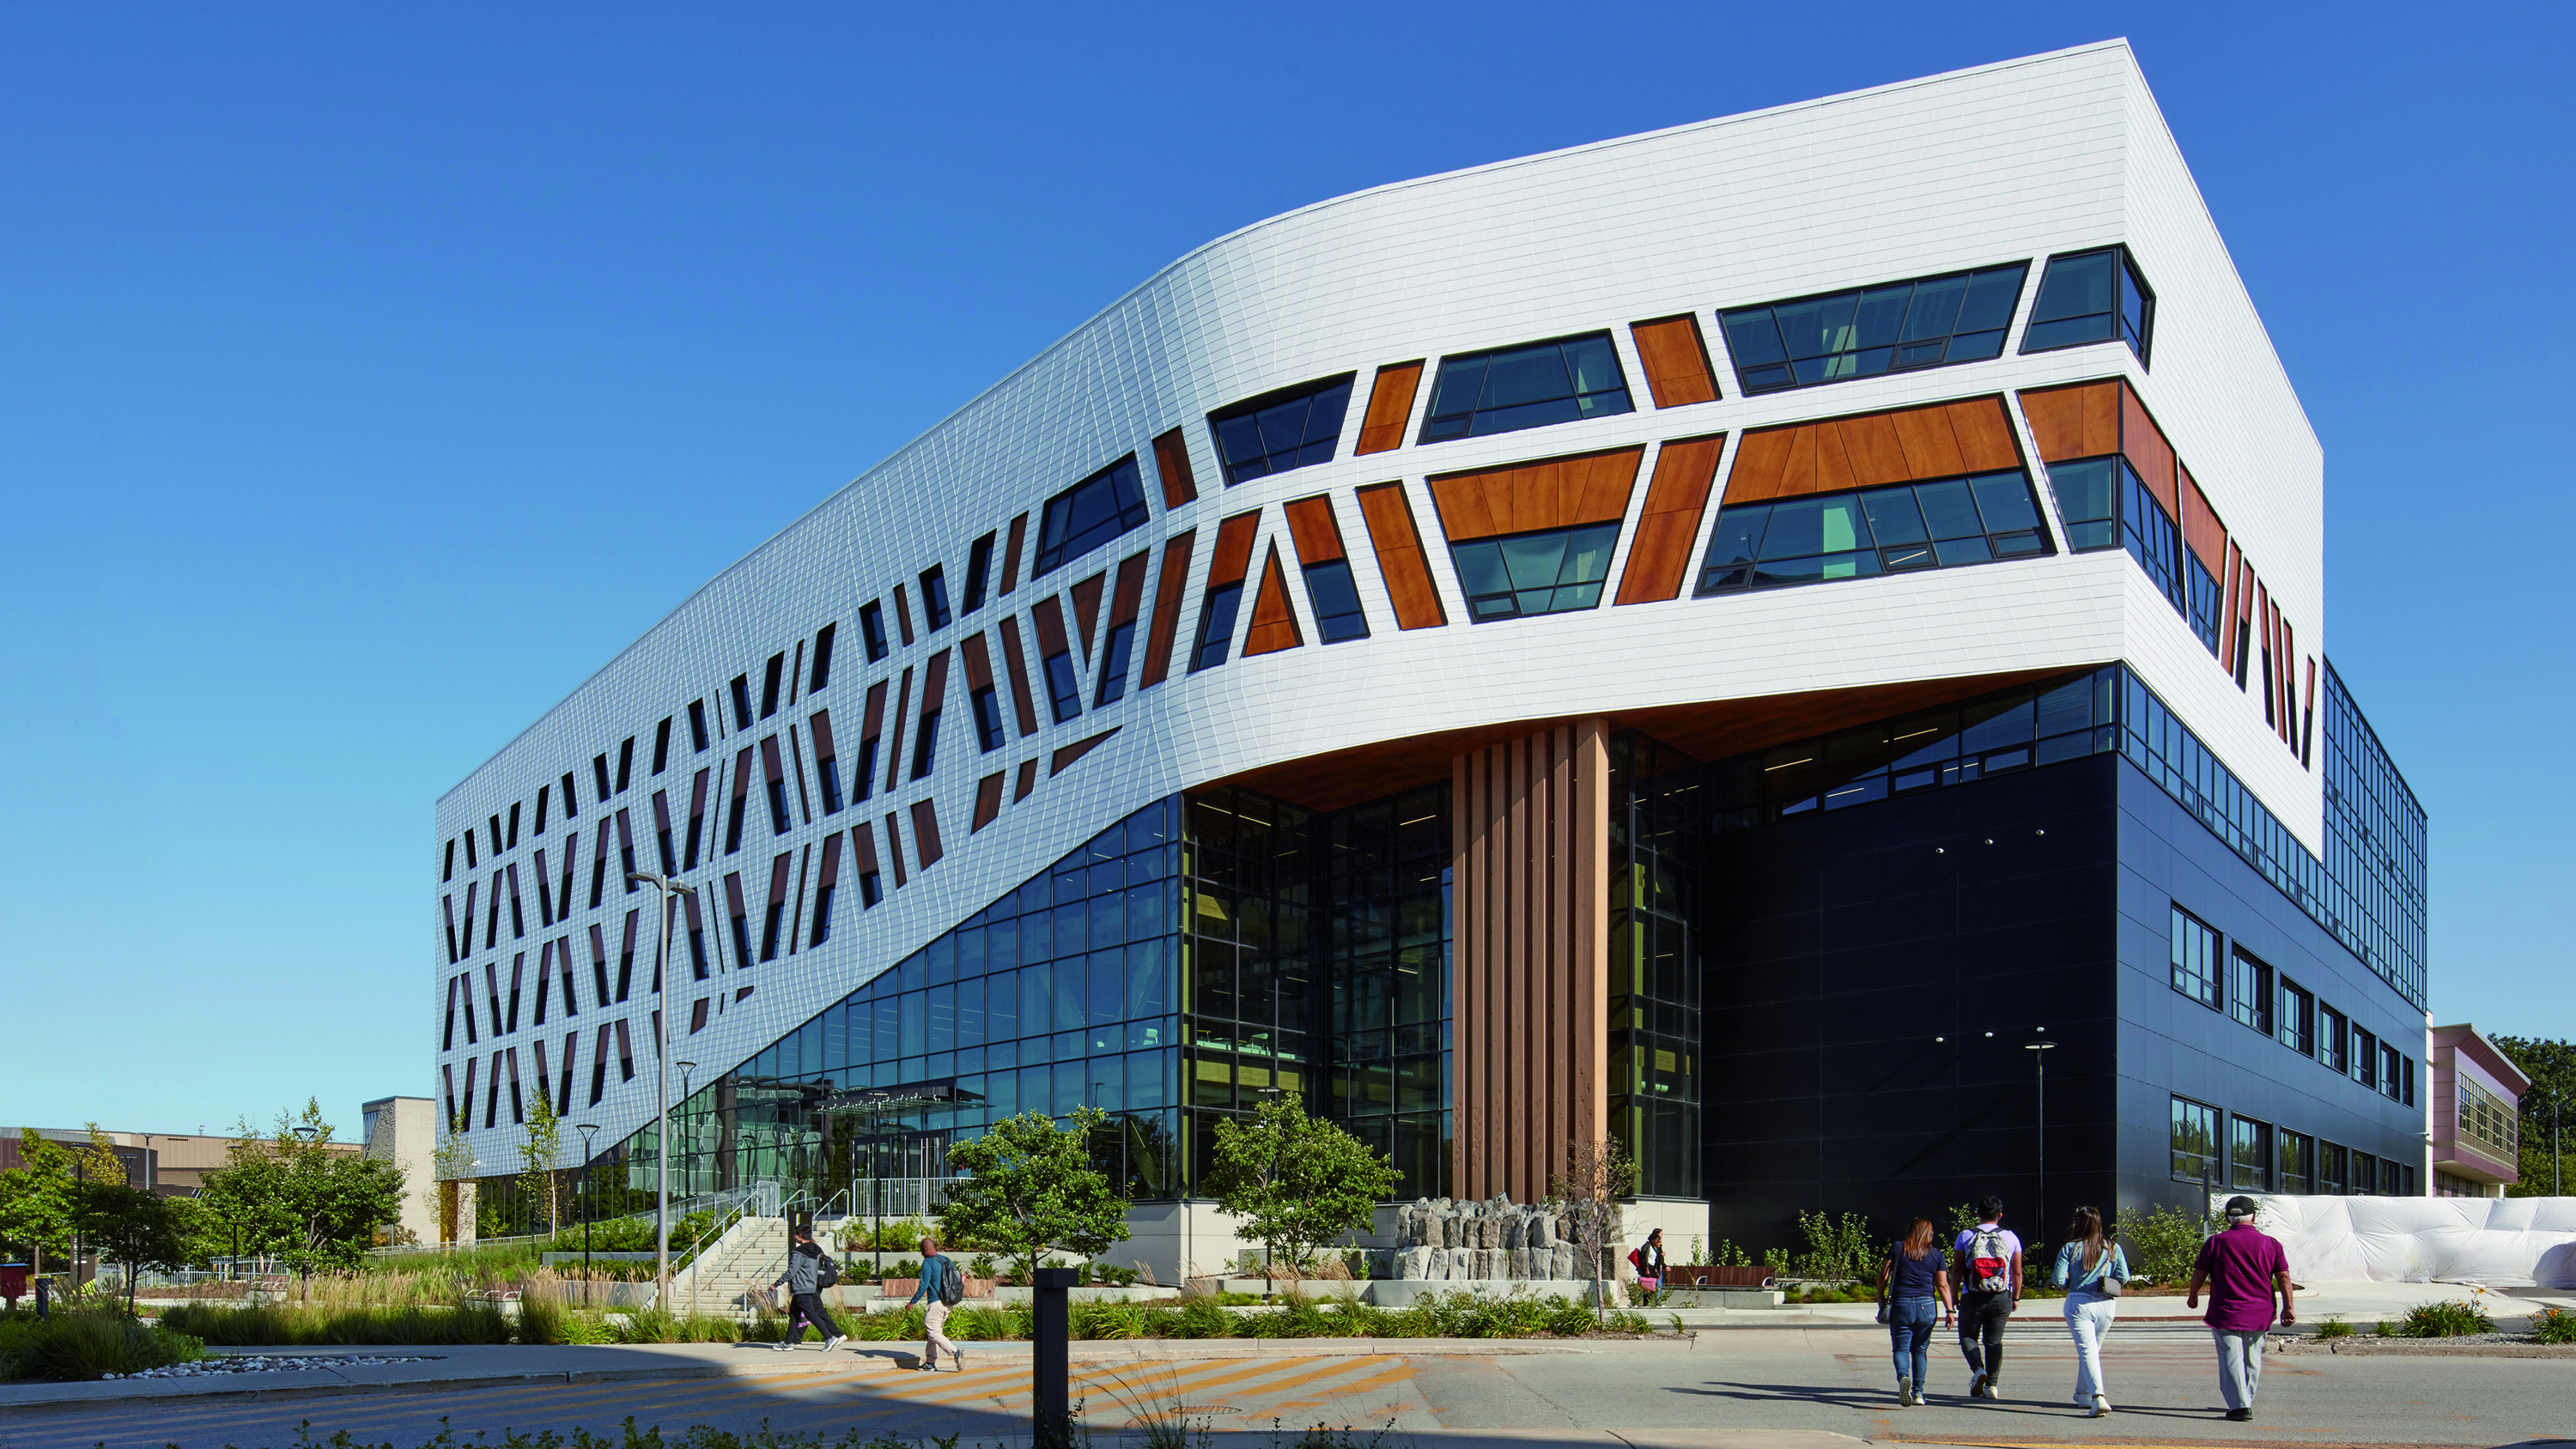 Centennial College–A Building Expansion exterior image